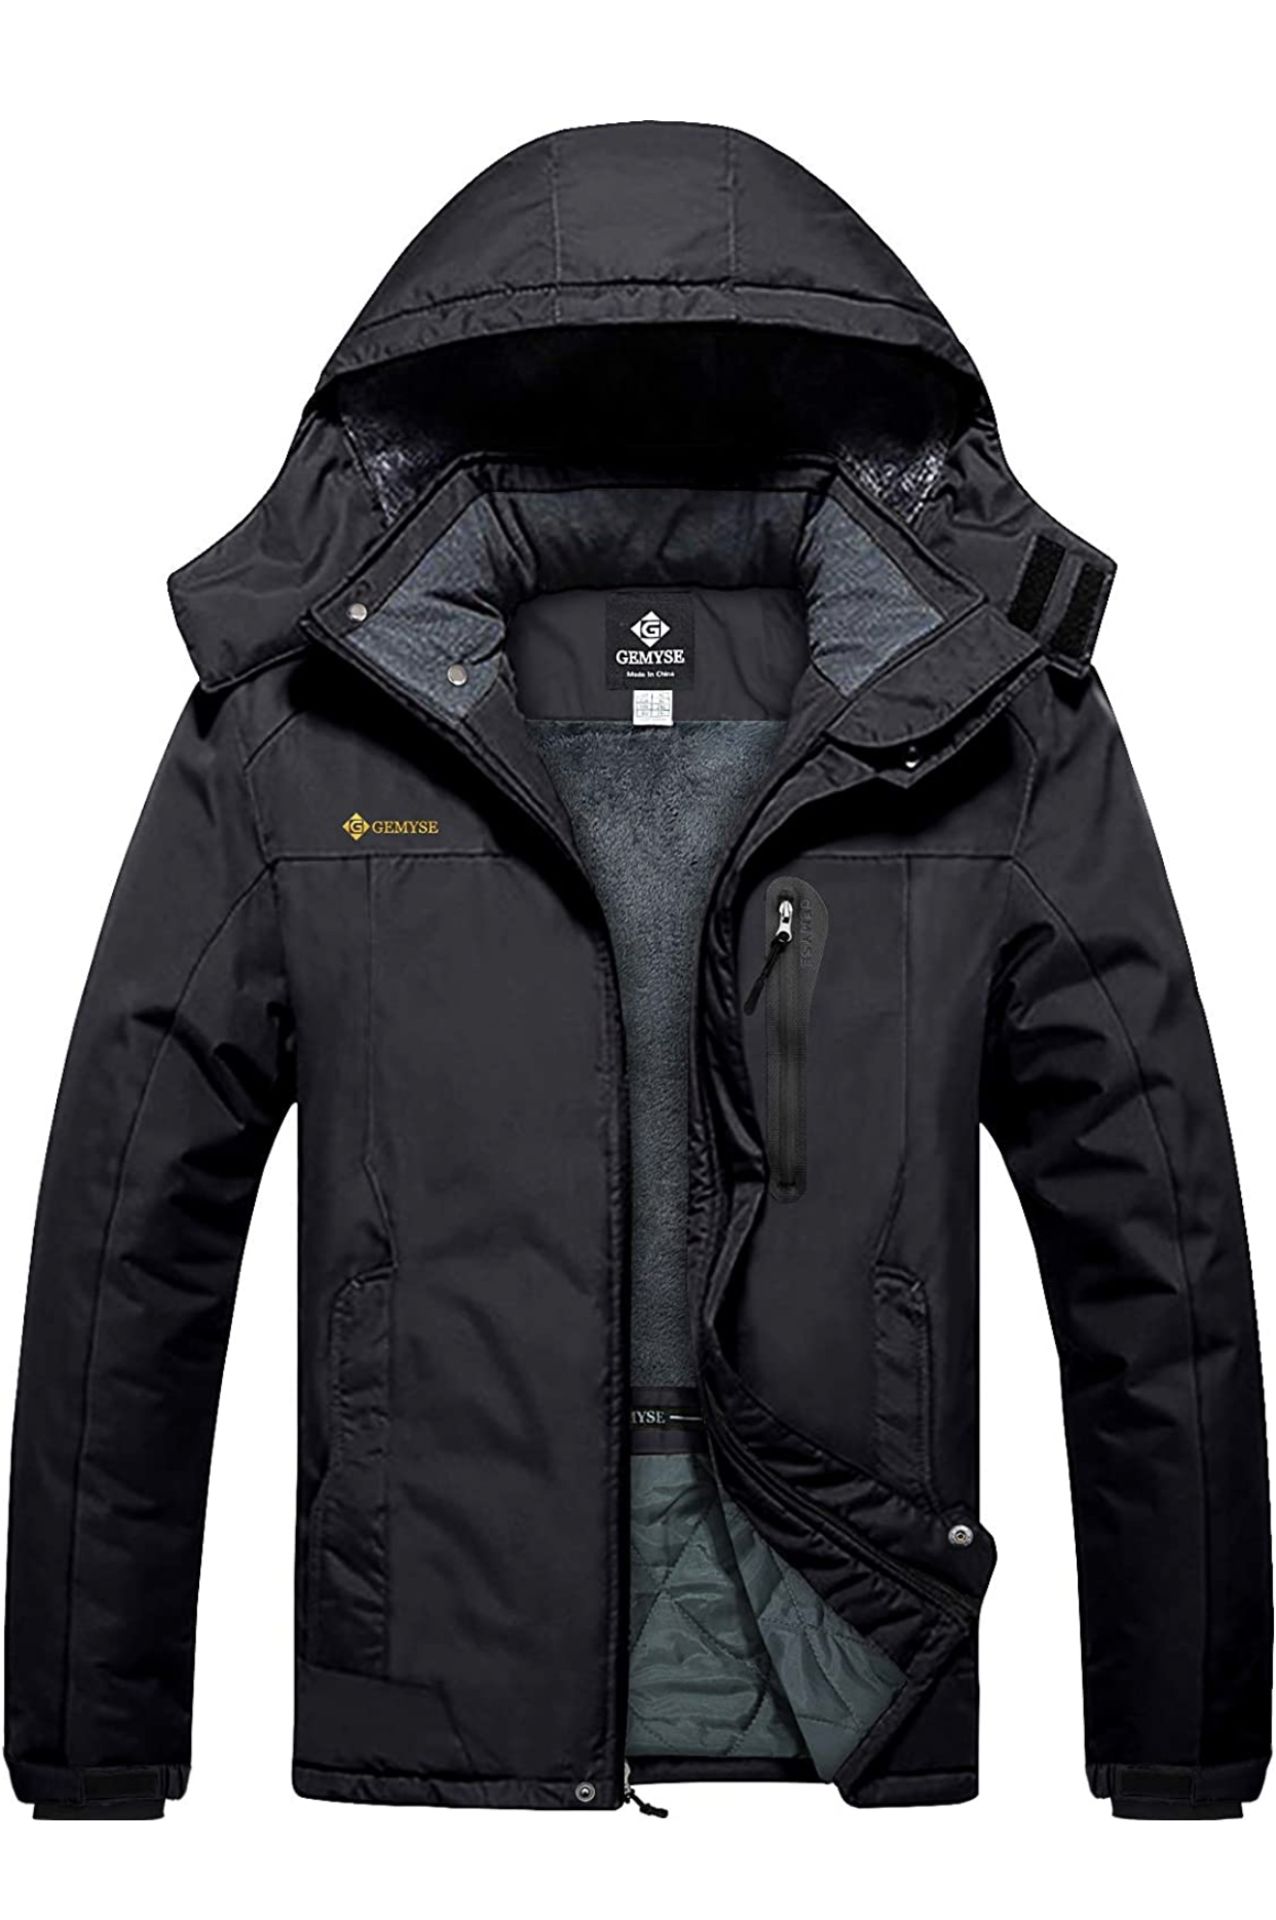 RRP £69.99 Gemyse Men's Mountain Waterproof Ski Jacket Outdoor Winter Coat, Medium